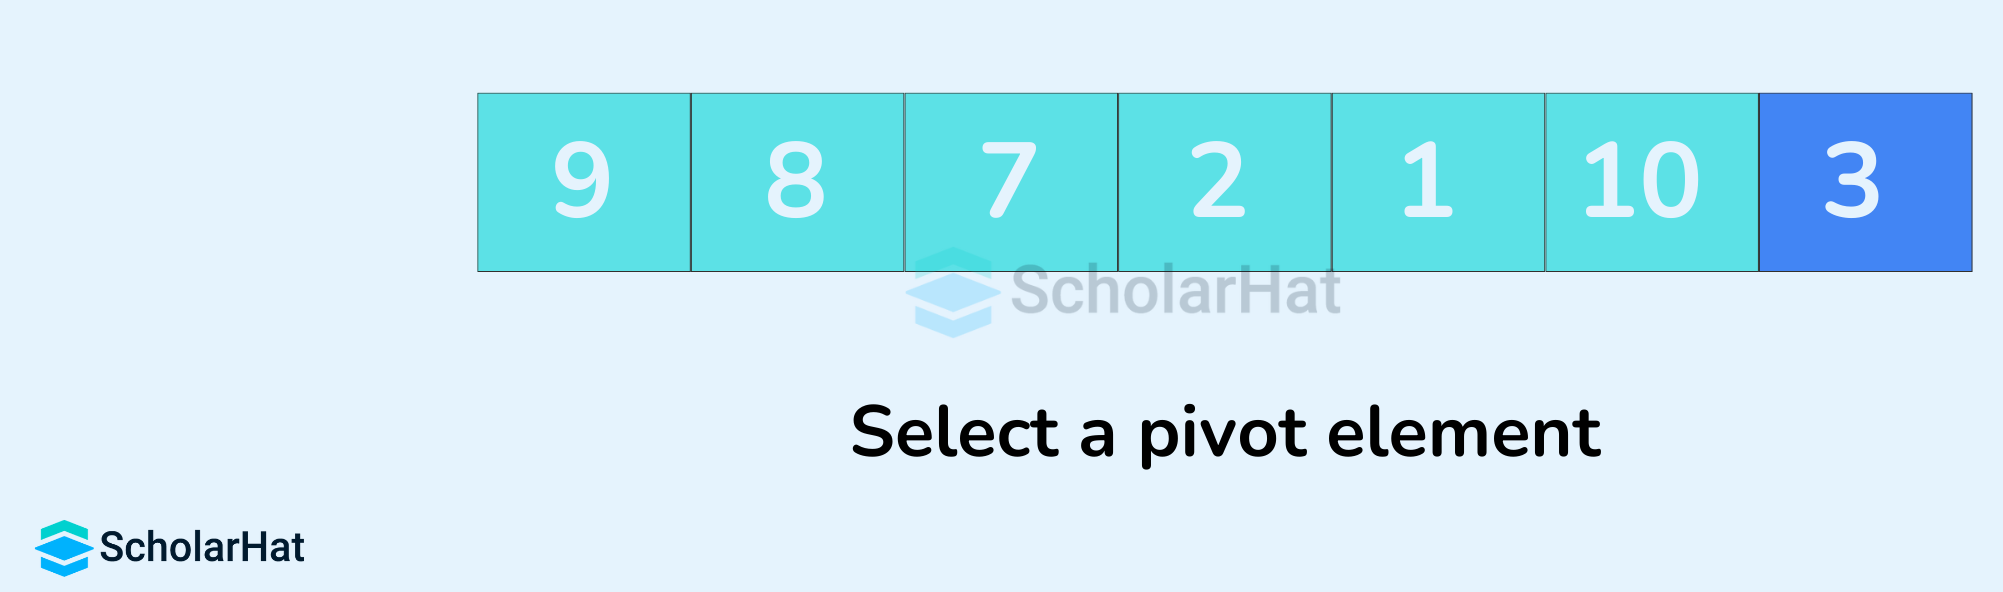 Select a pivot element